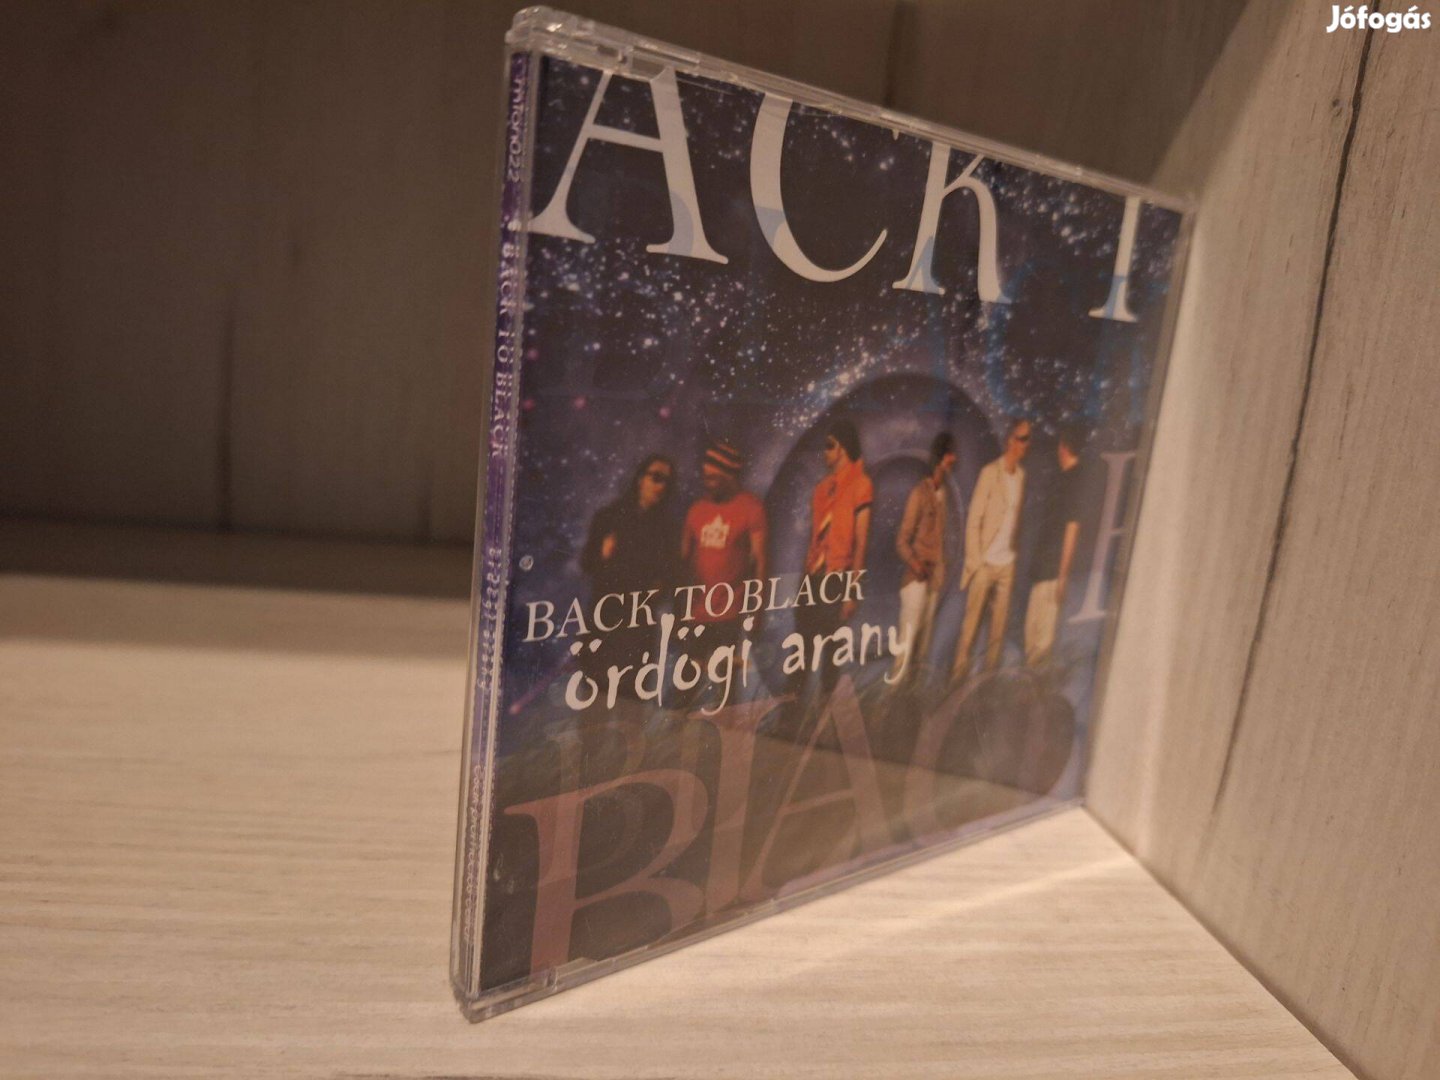 Back II Black - Ördögi Arany - promo maxi CD